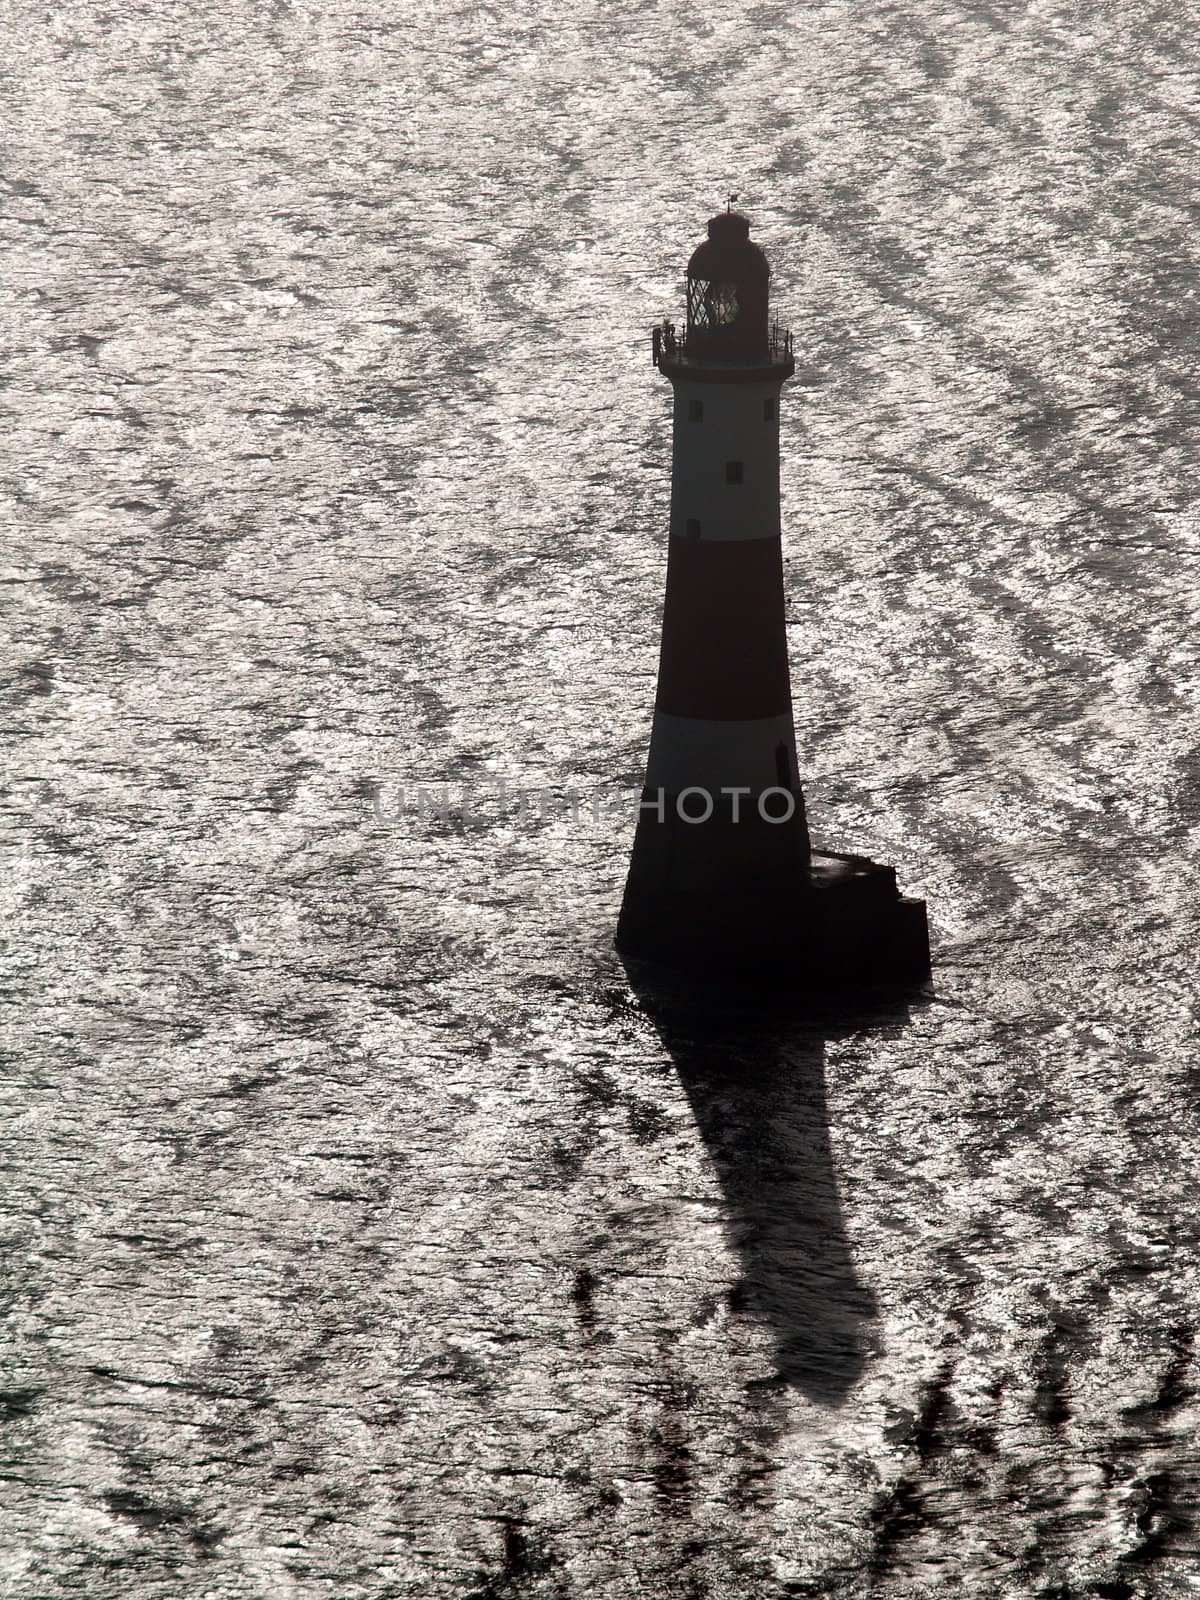 Lighthouse of Beachy Head by anderm